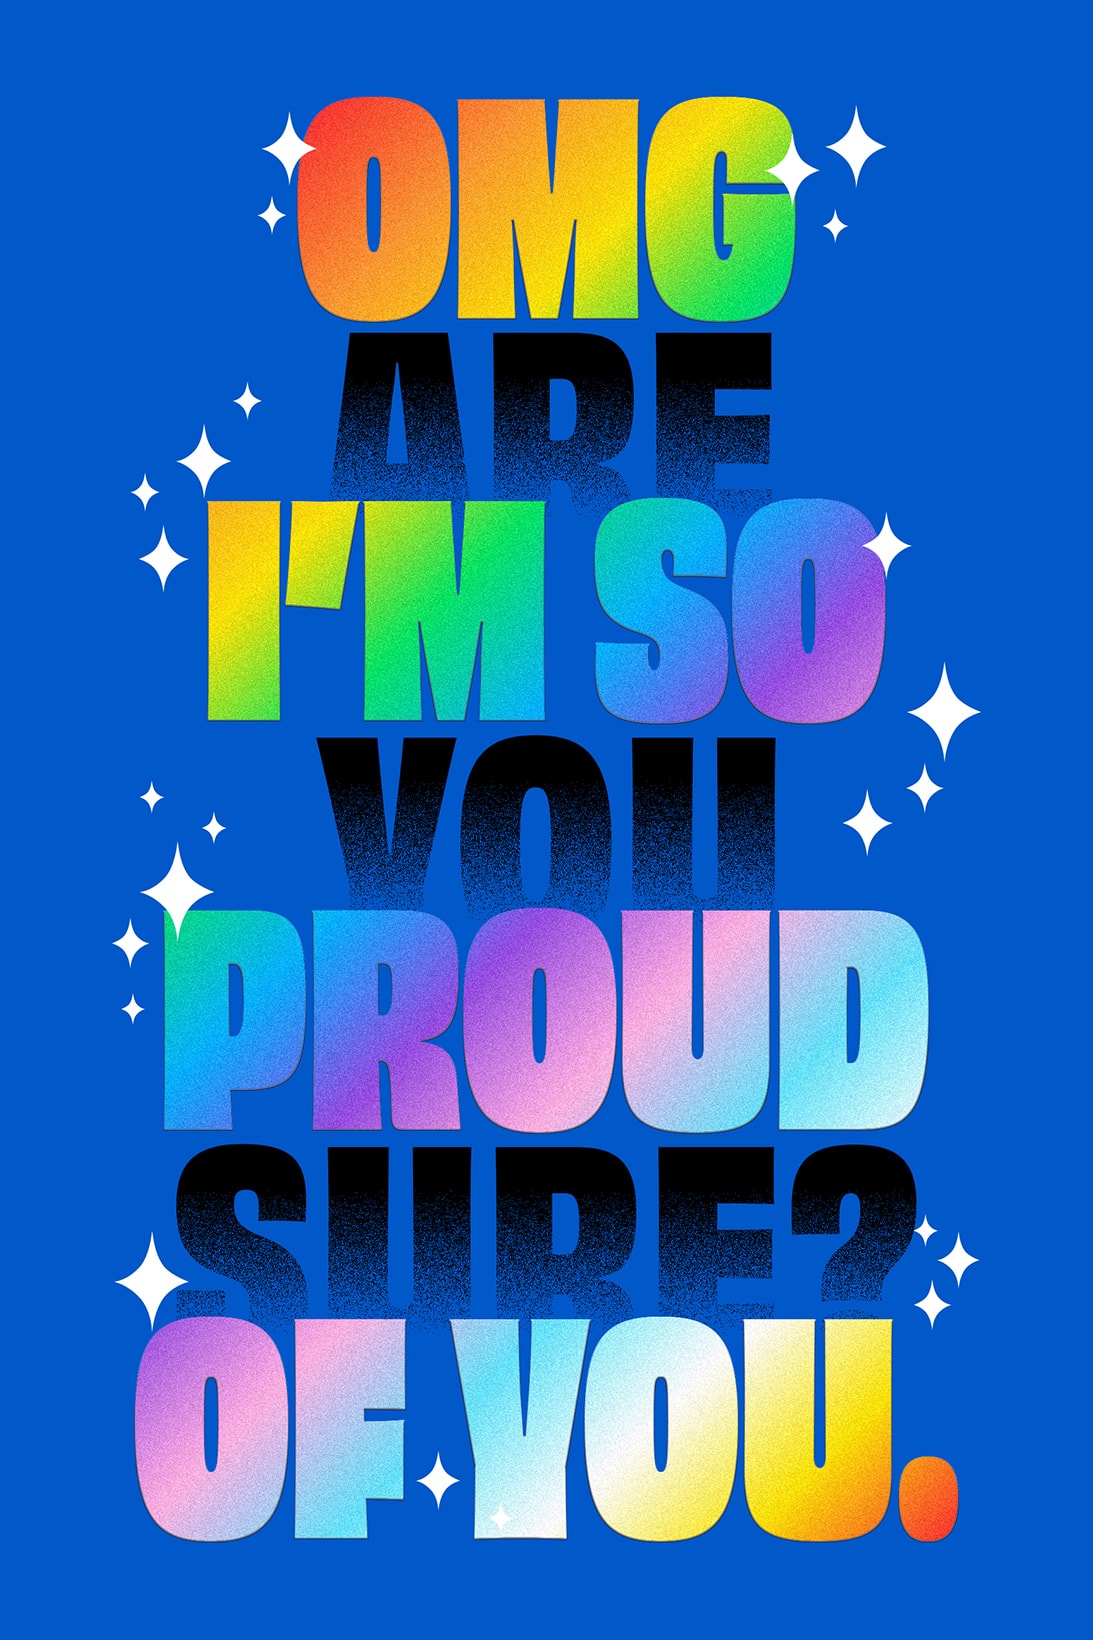 oreo pride month lgbtq packs gilbert baker lesbian bisexual pansexual transgender flags